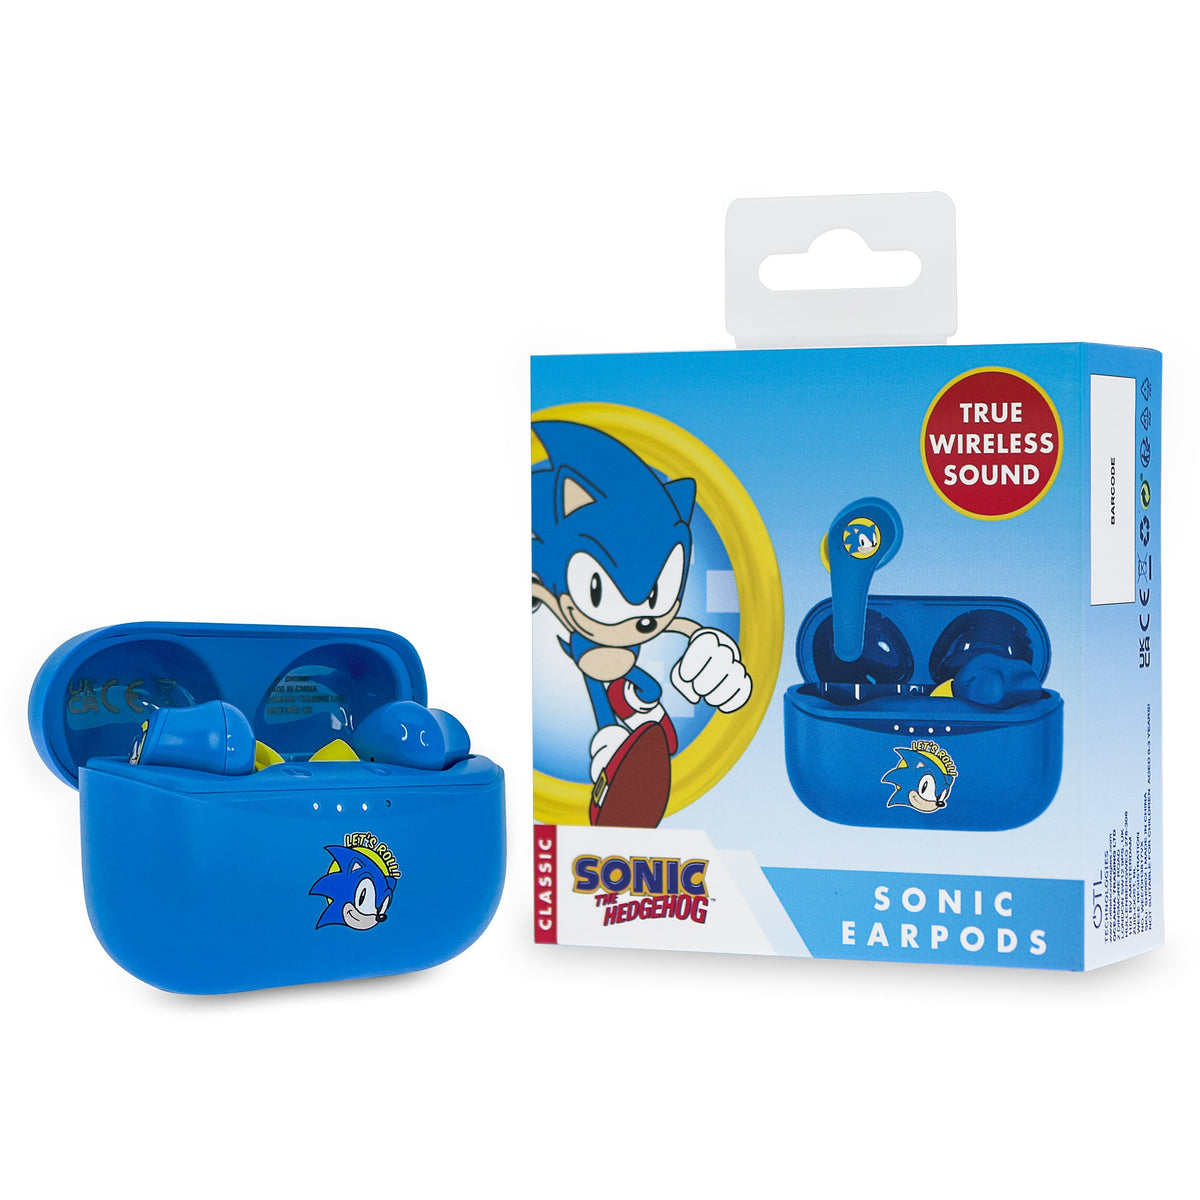 OTL SEGA Sonic The Hedgehog TWS Wireless Earphones - Blue | SHOO902 from OTL - DID Electrical